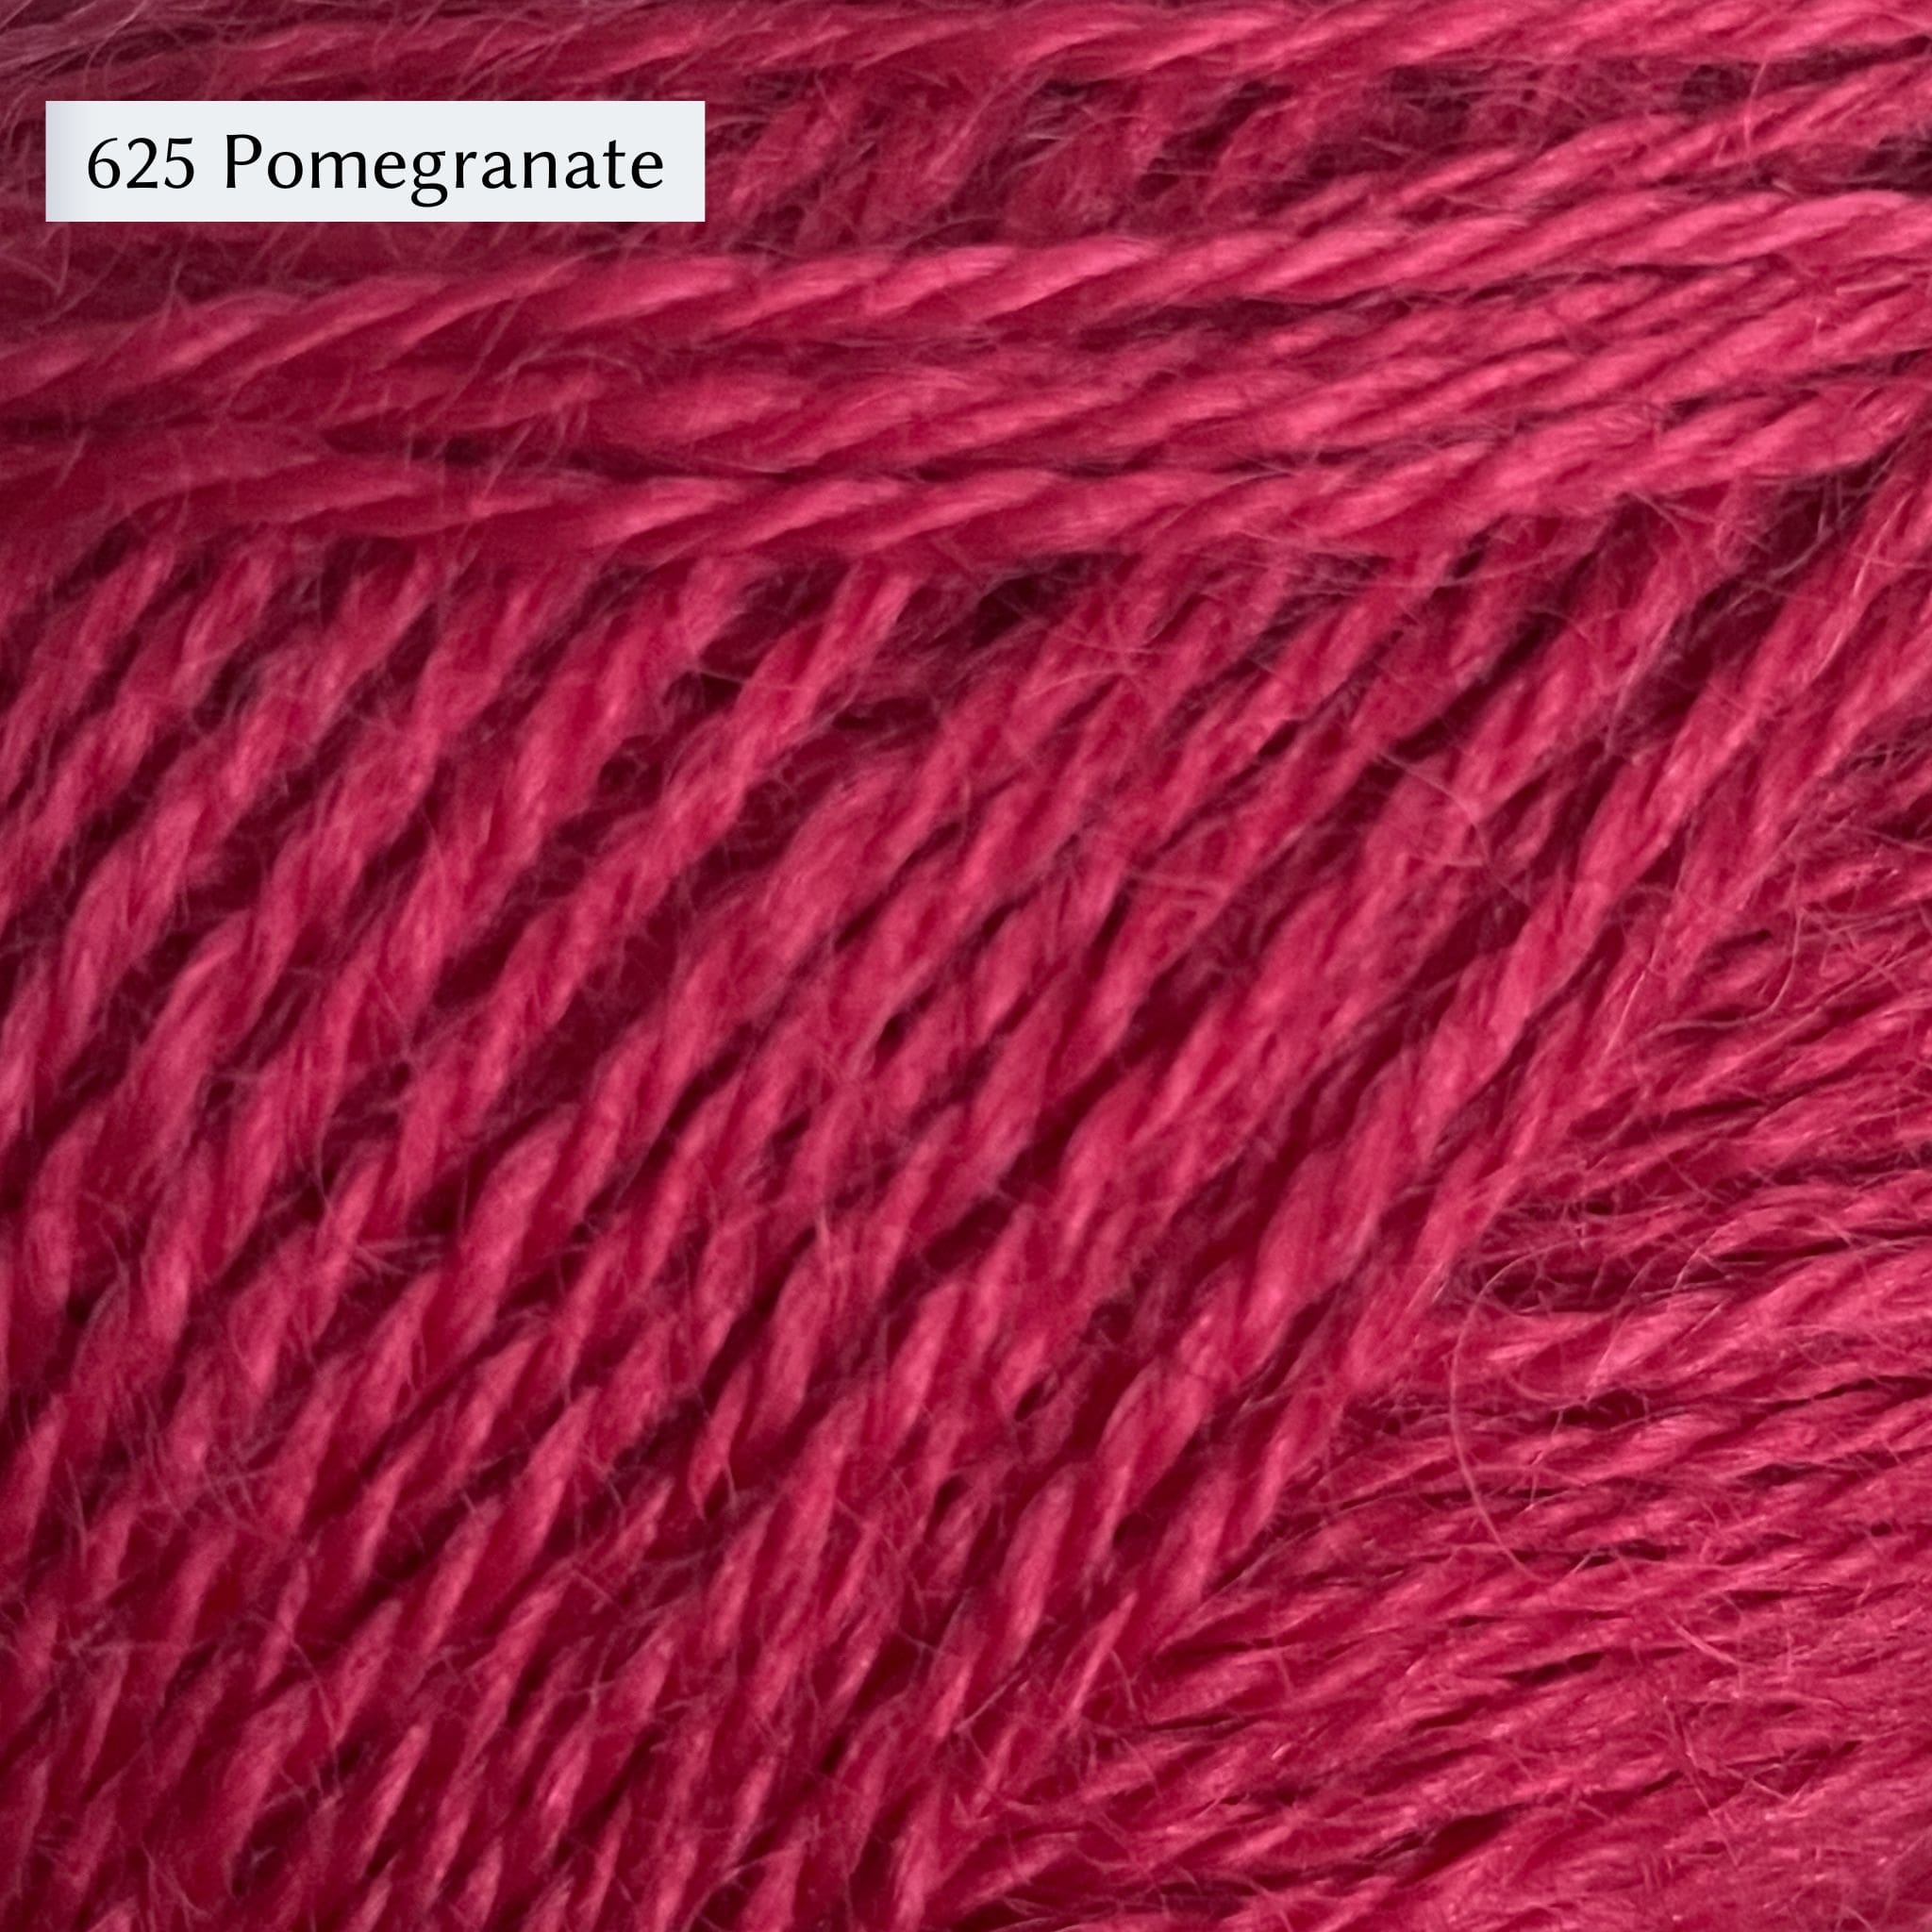 Wensleydale Longwool Sheep Shop 4ply yarn, a fingering weight yarn, in color 625 Pomegranate, a warm raspberry red